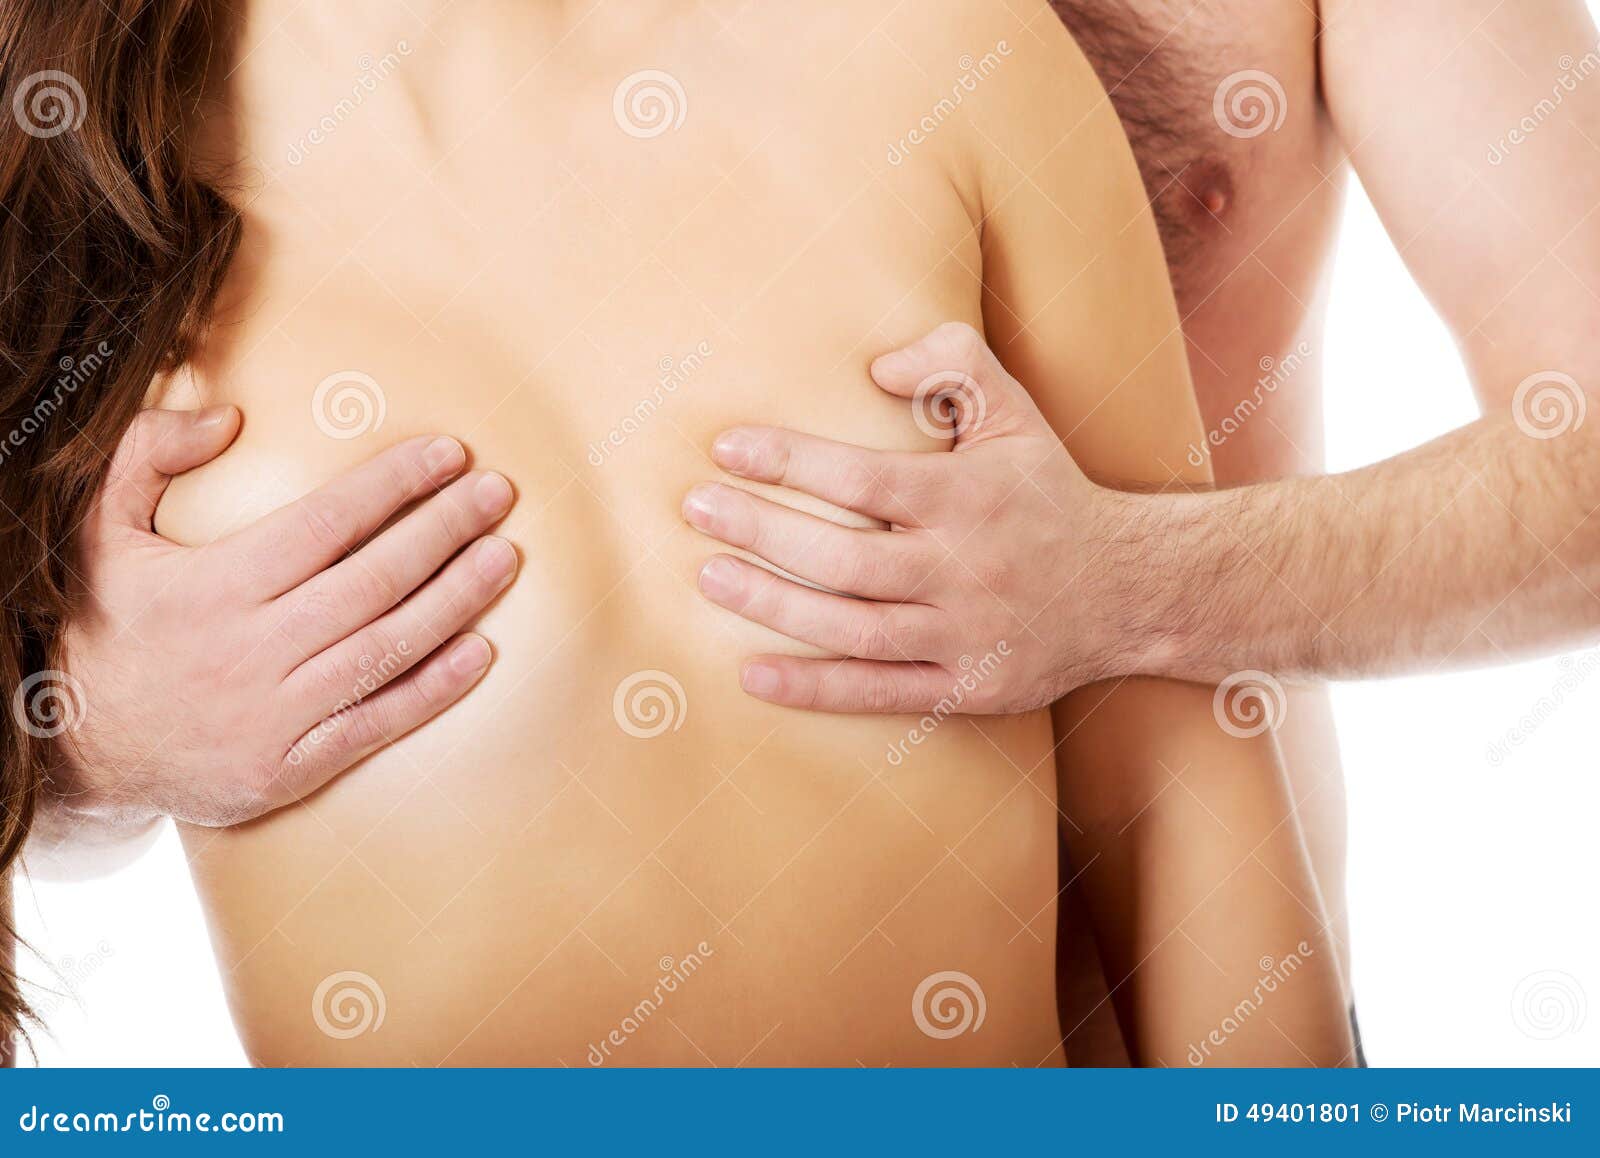 Touching breast man female LovePanky